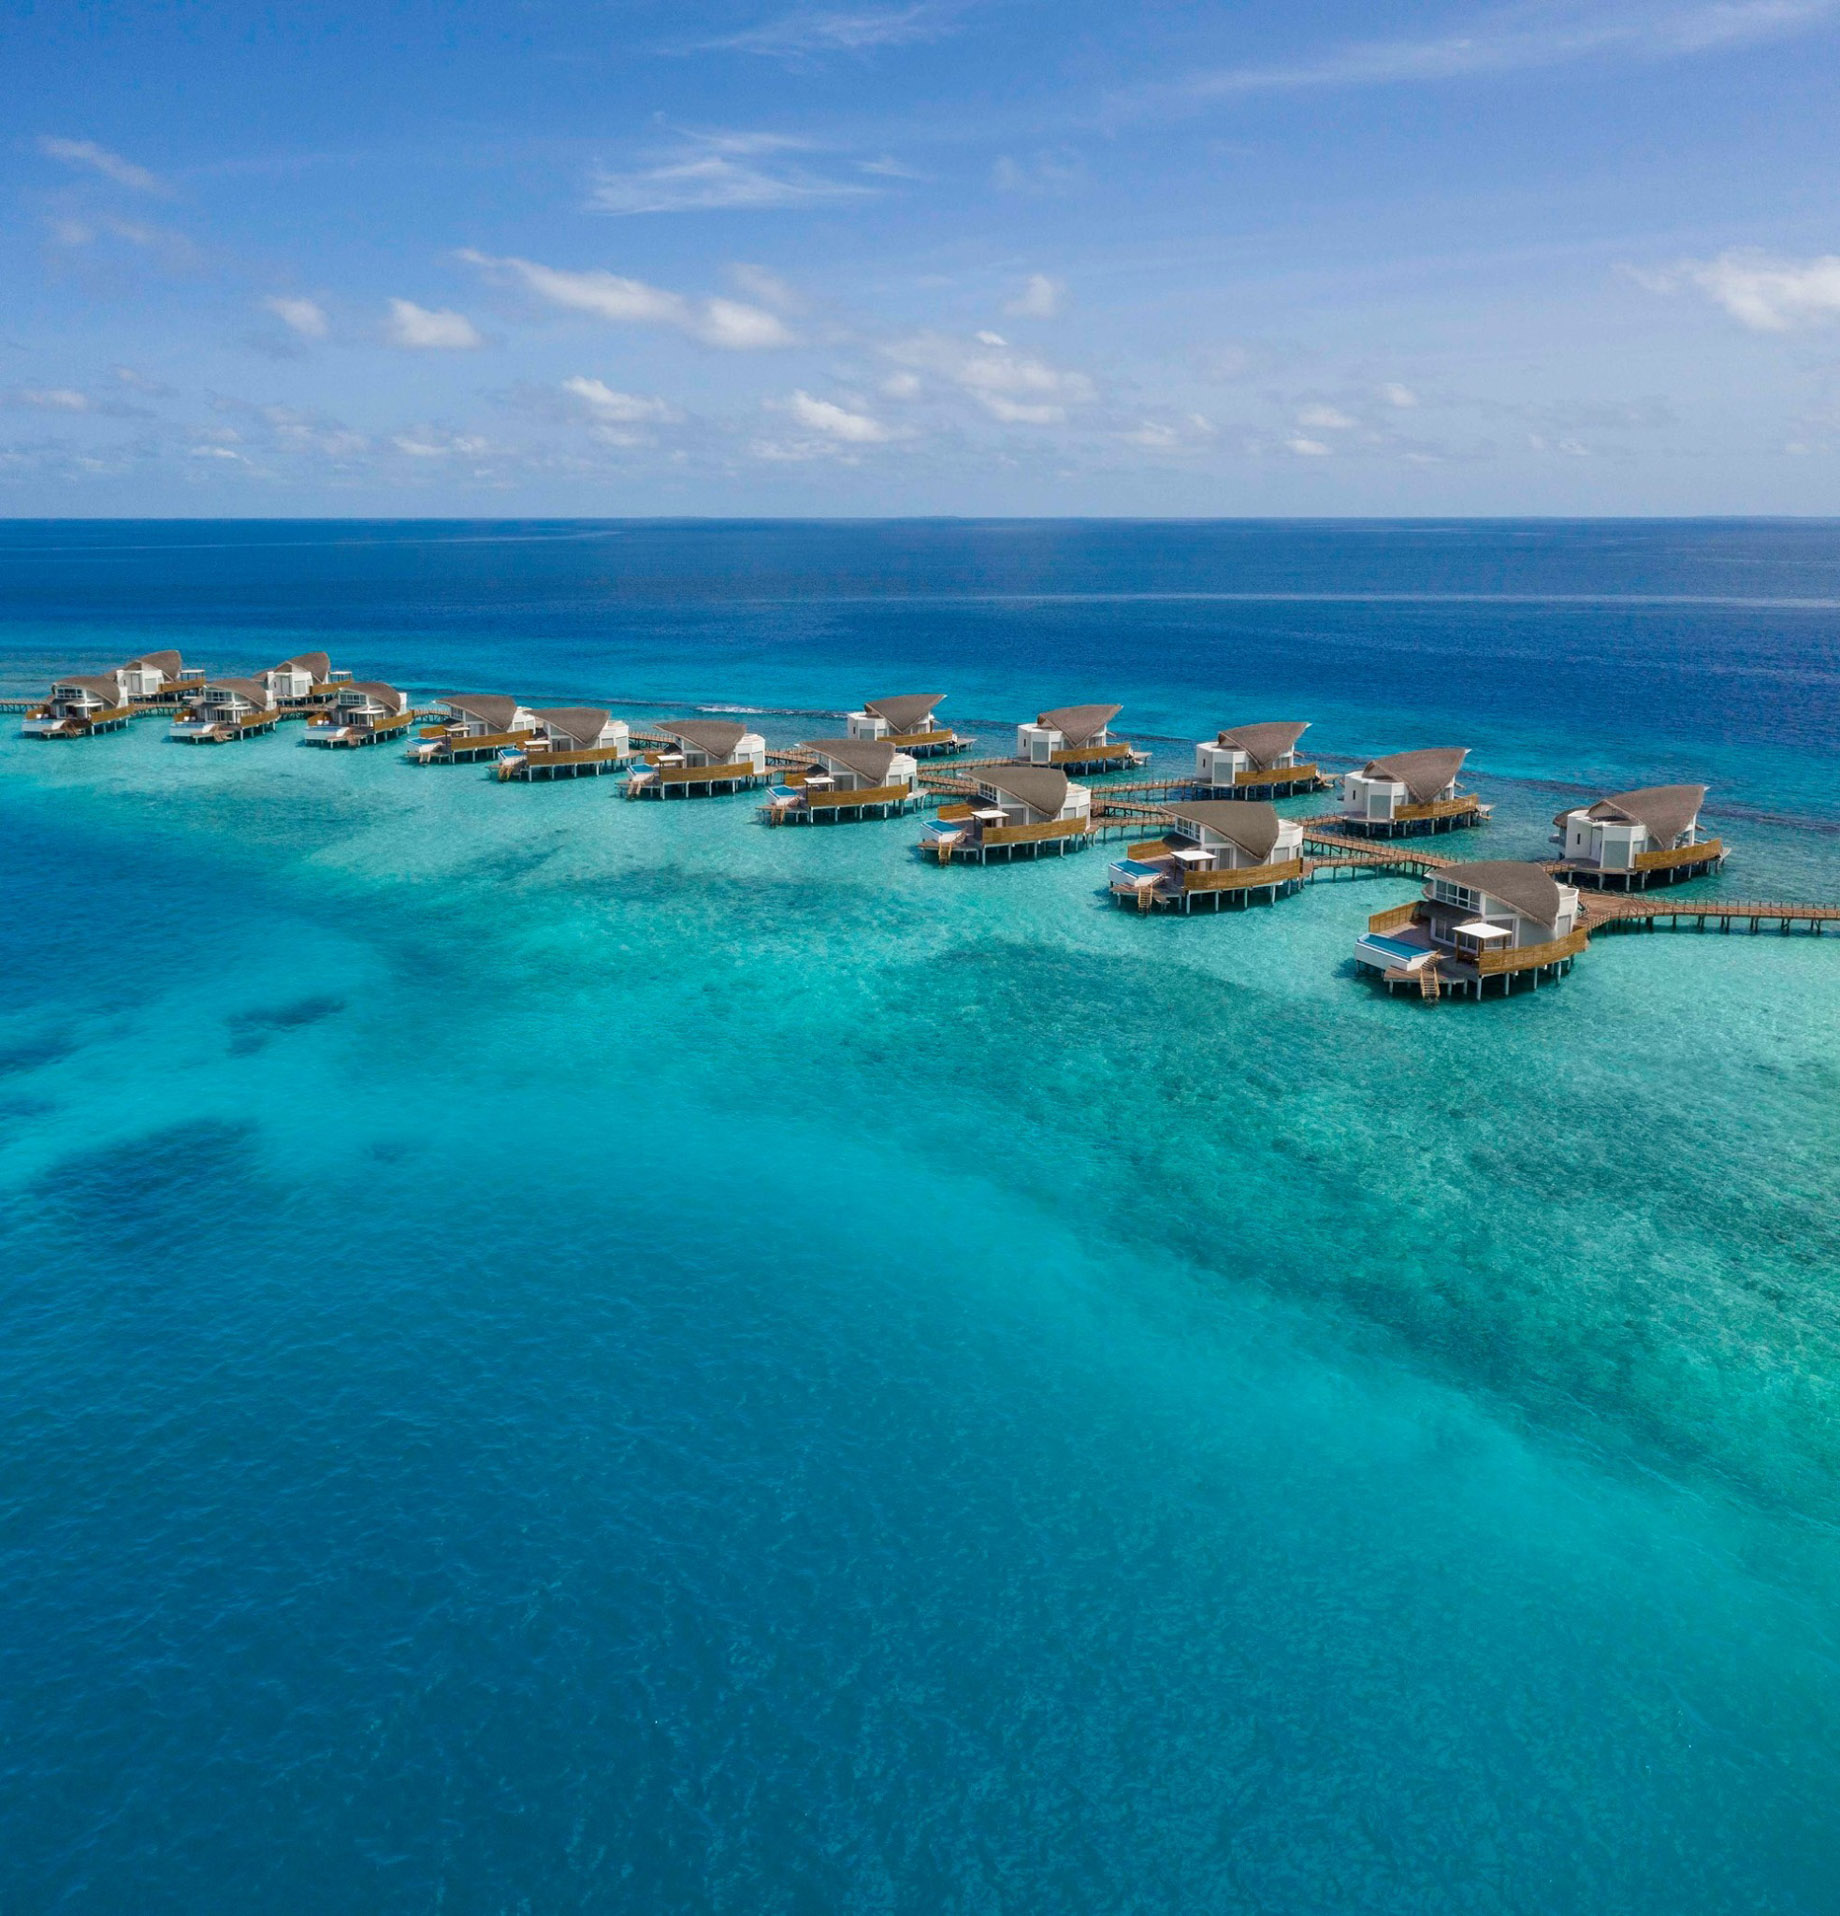 JW Marriott Maldives Resort & Spa – Shaviyani Atoll, Maldives – Overwater Pool Villas